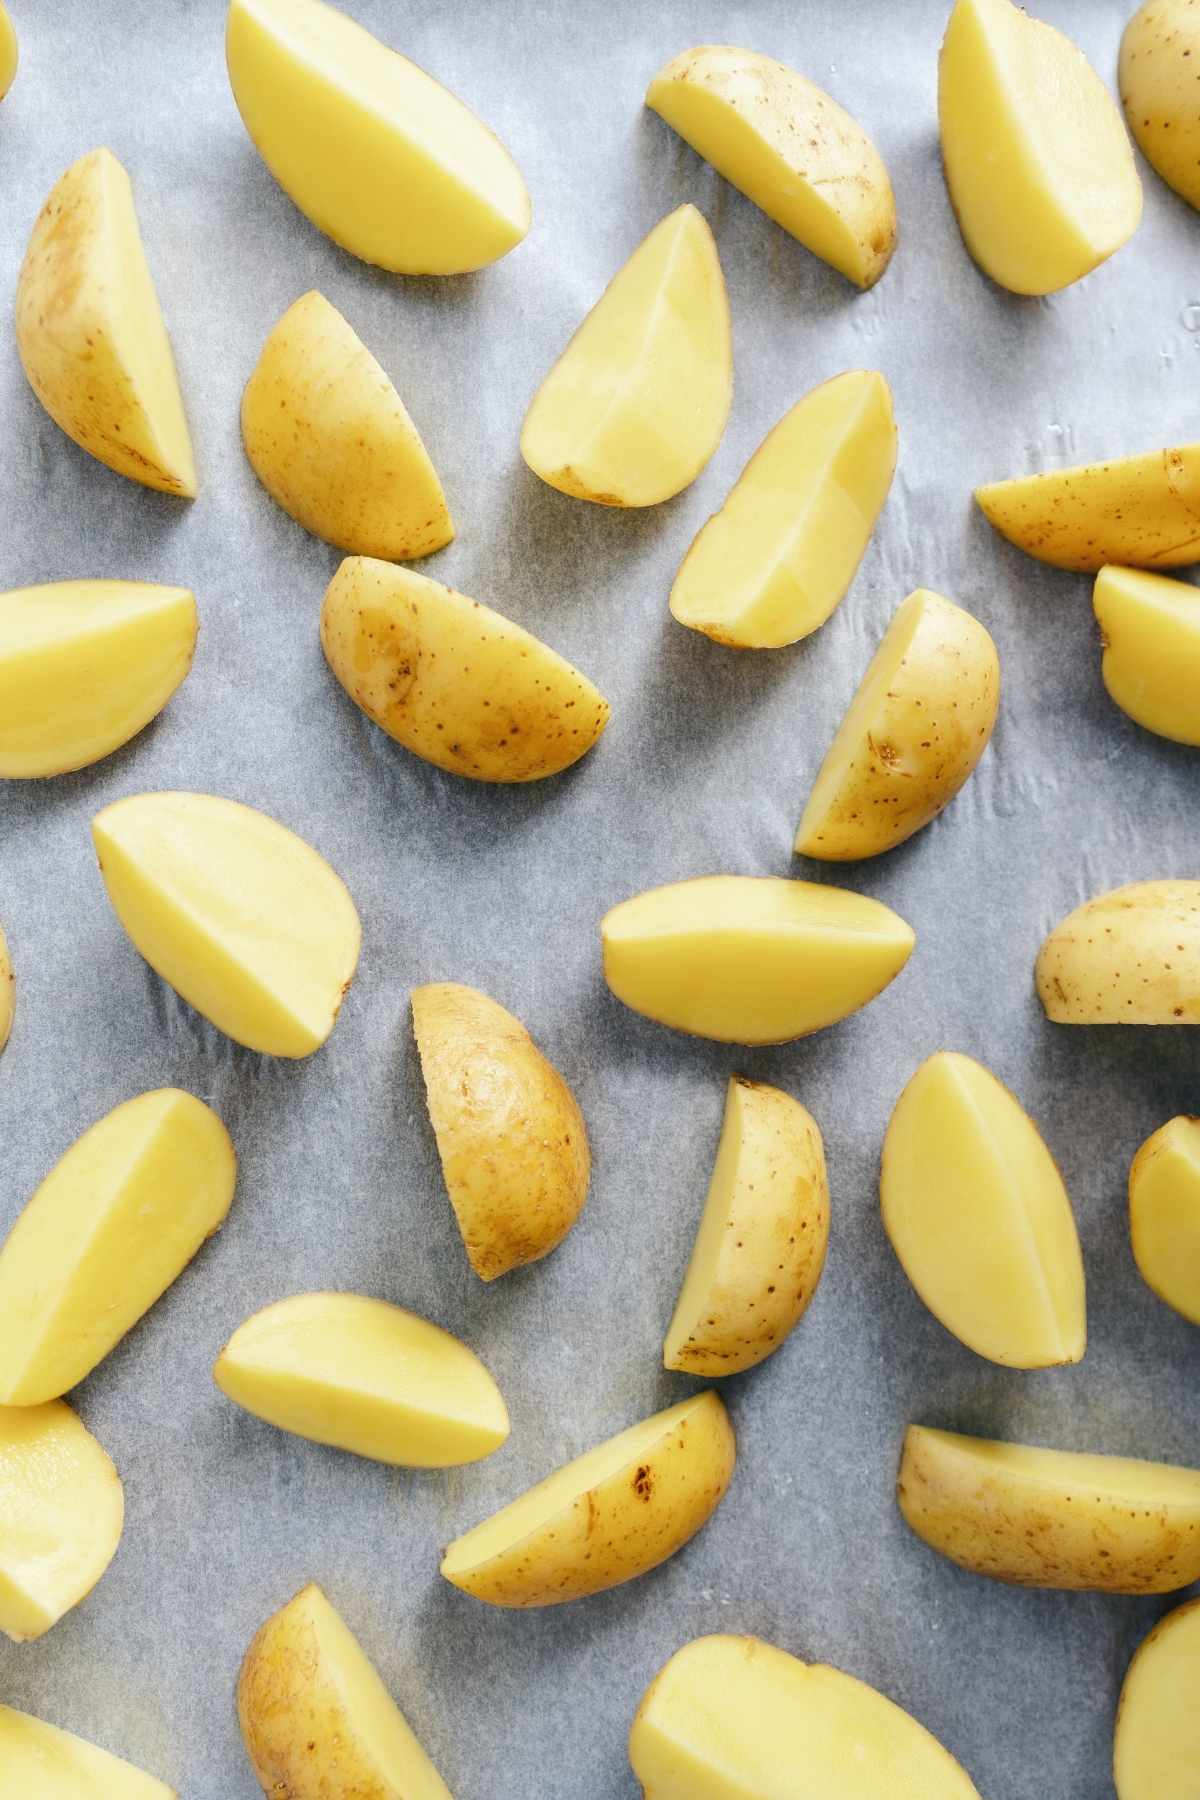 How to Cut Potato Wedges - IzzyCooking